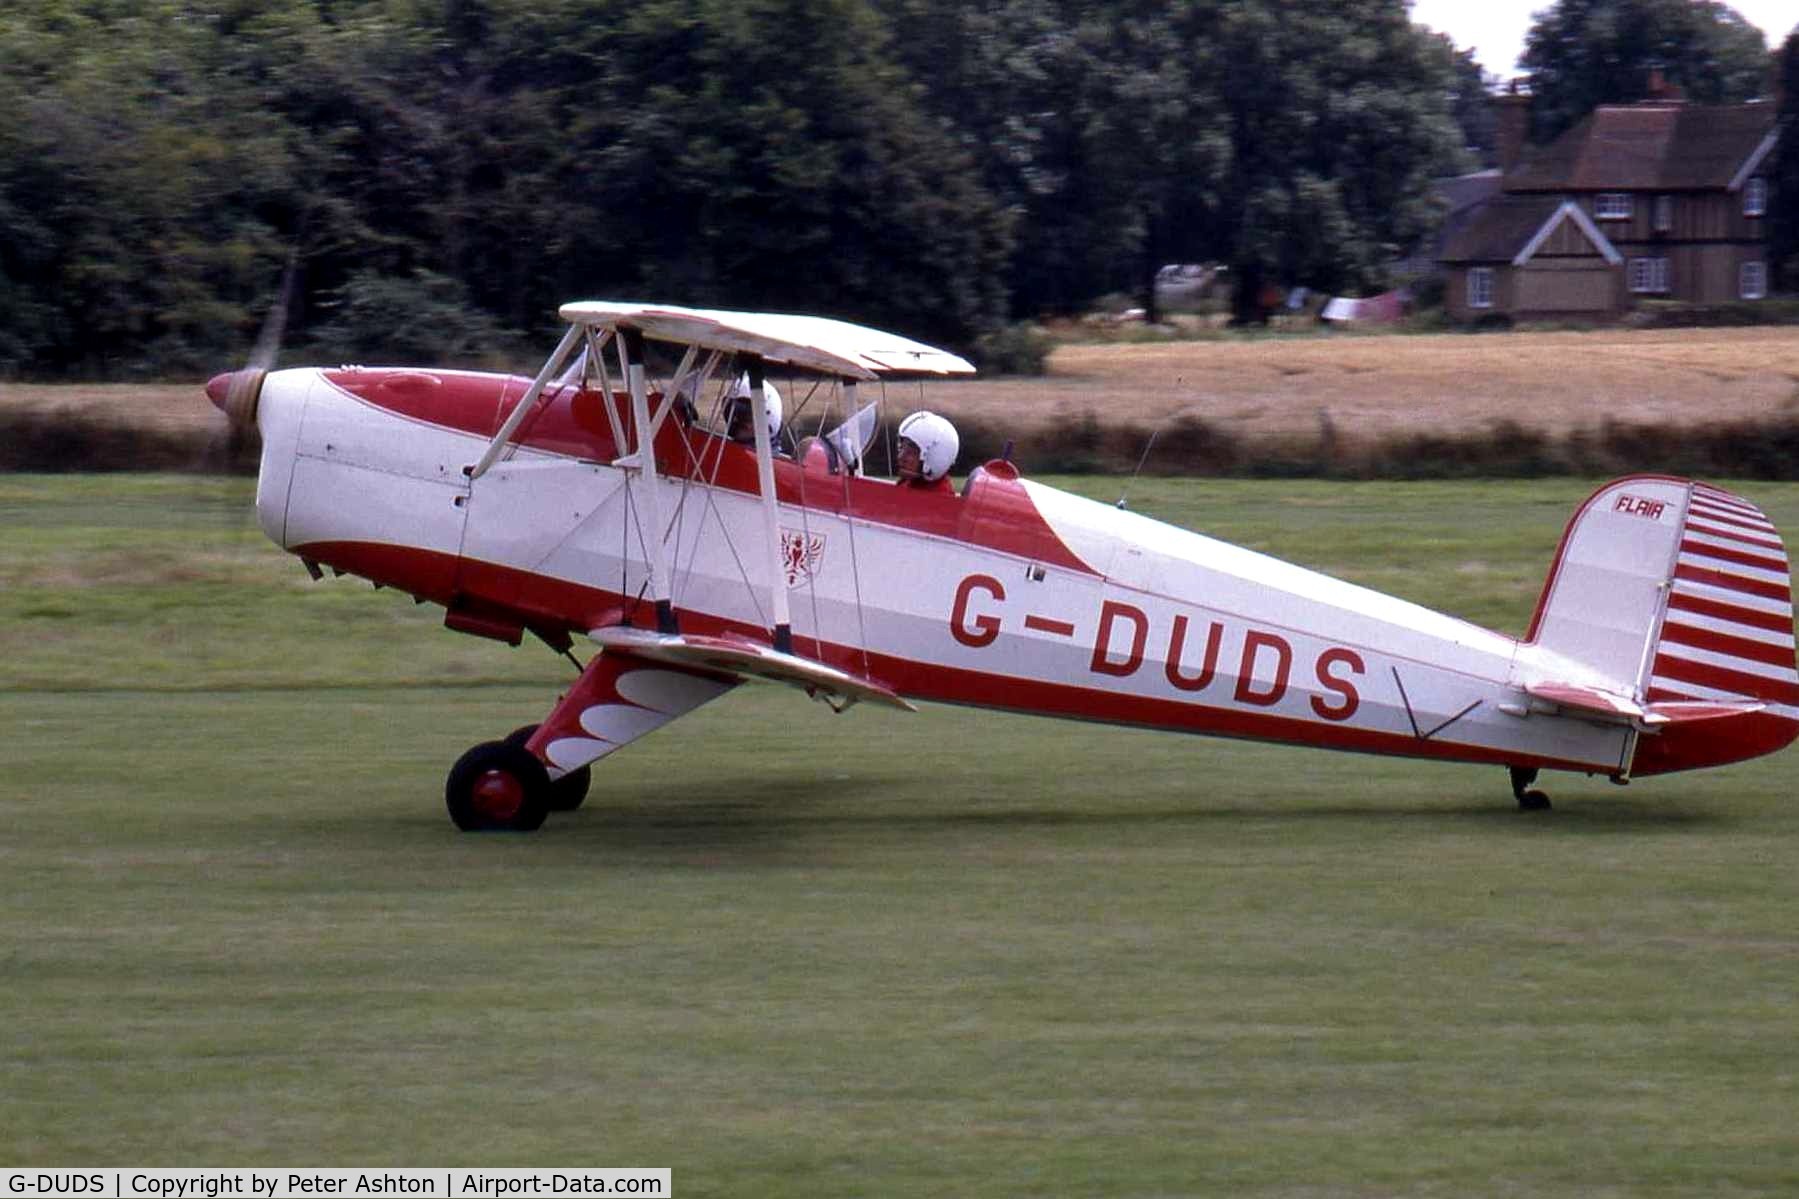 G-DUDS, 1957 CASA 1-131E Srs 2000 Jungmann C/N 2108/512, Old Warden, Bedfordshire, England. August 1993